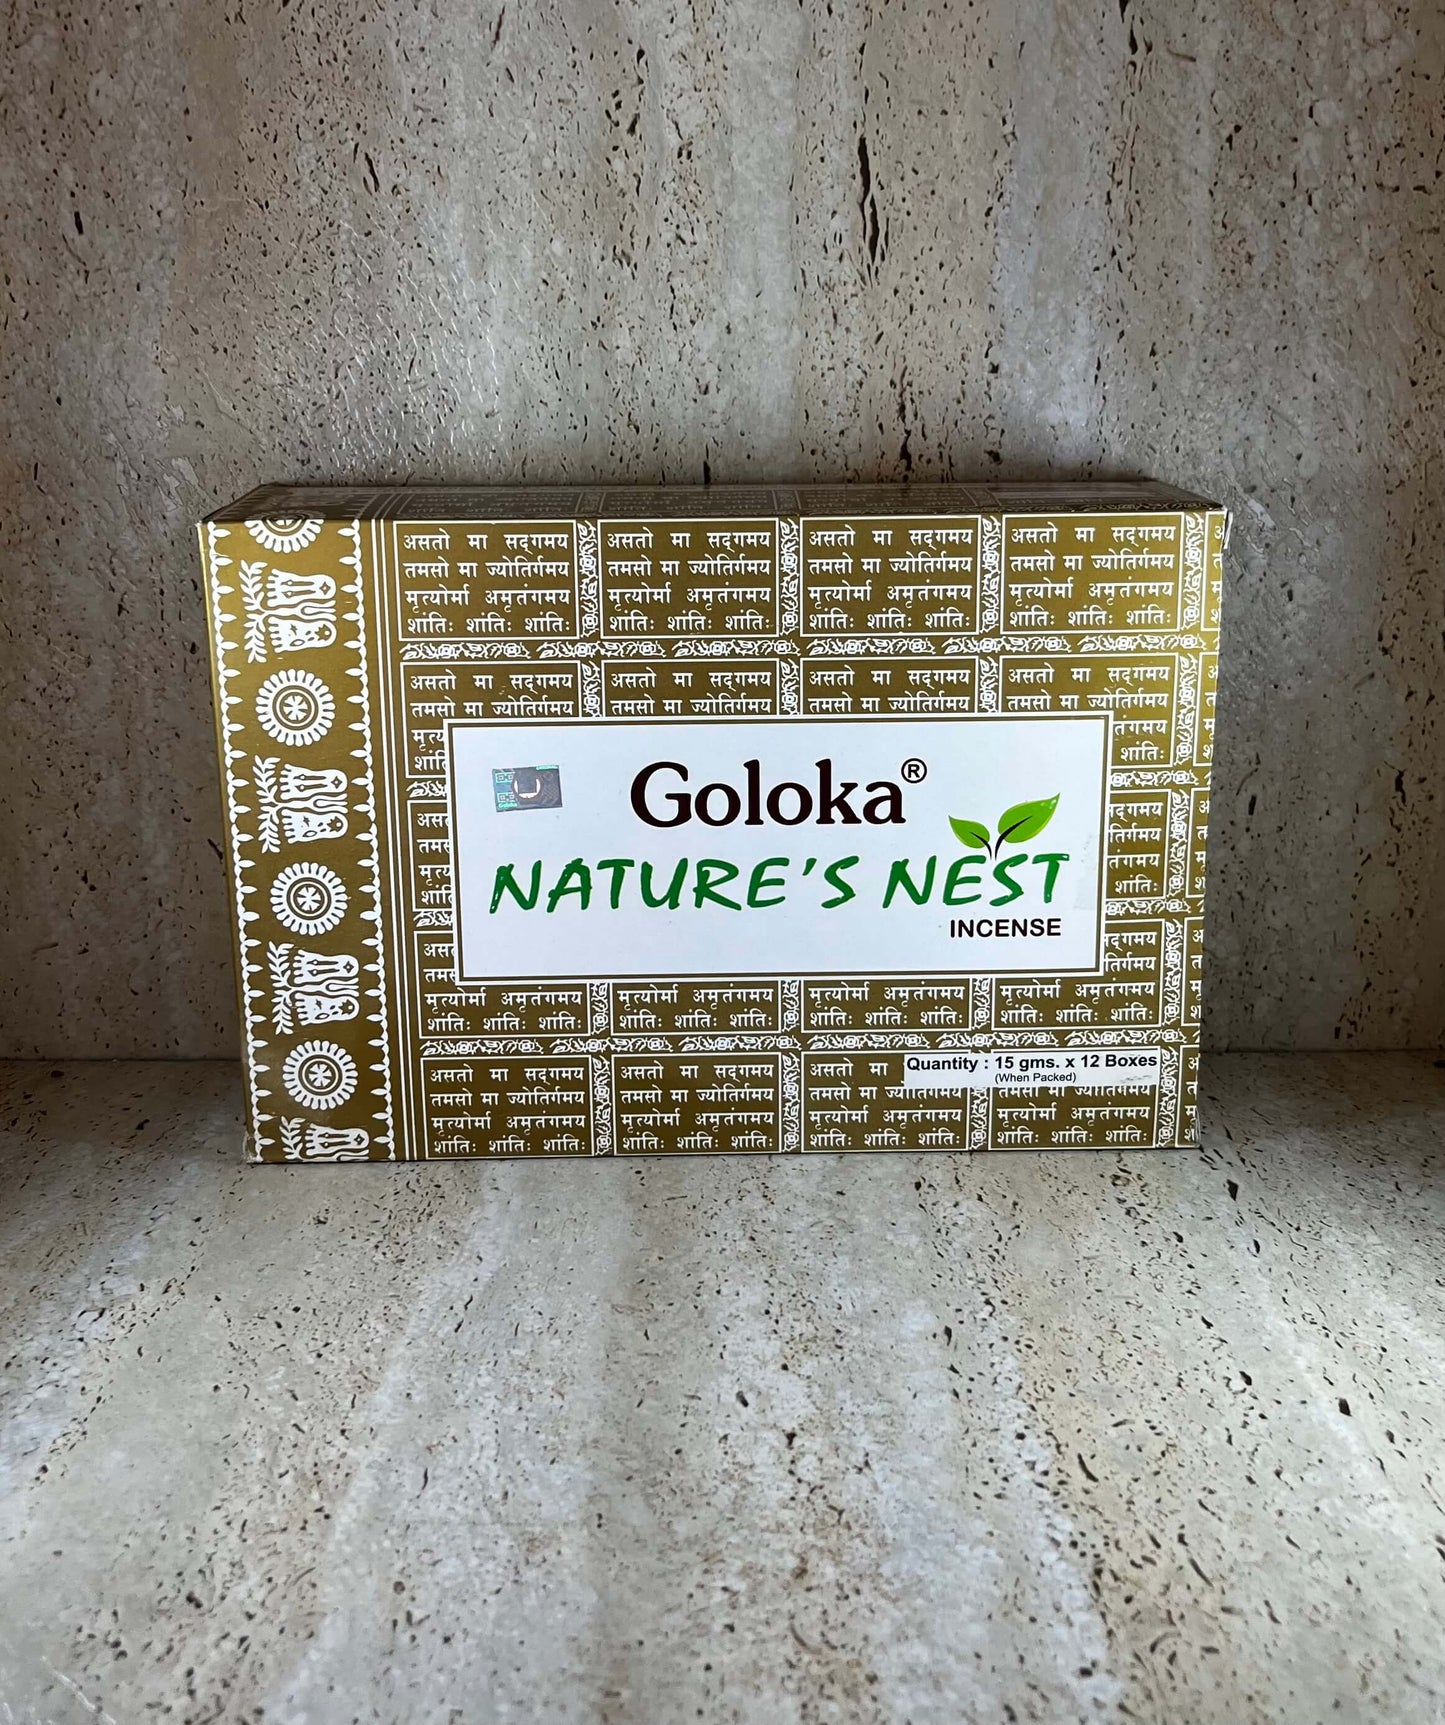 Goloka Nature's Nest incense